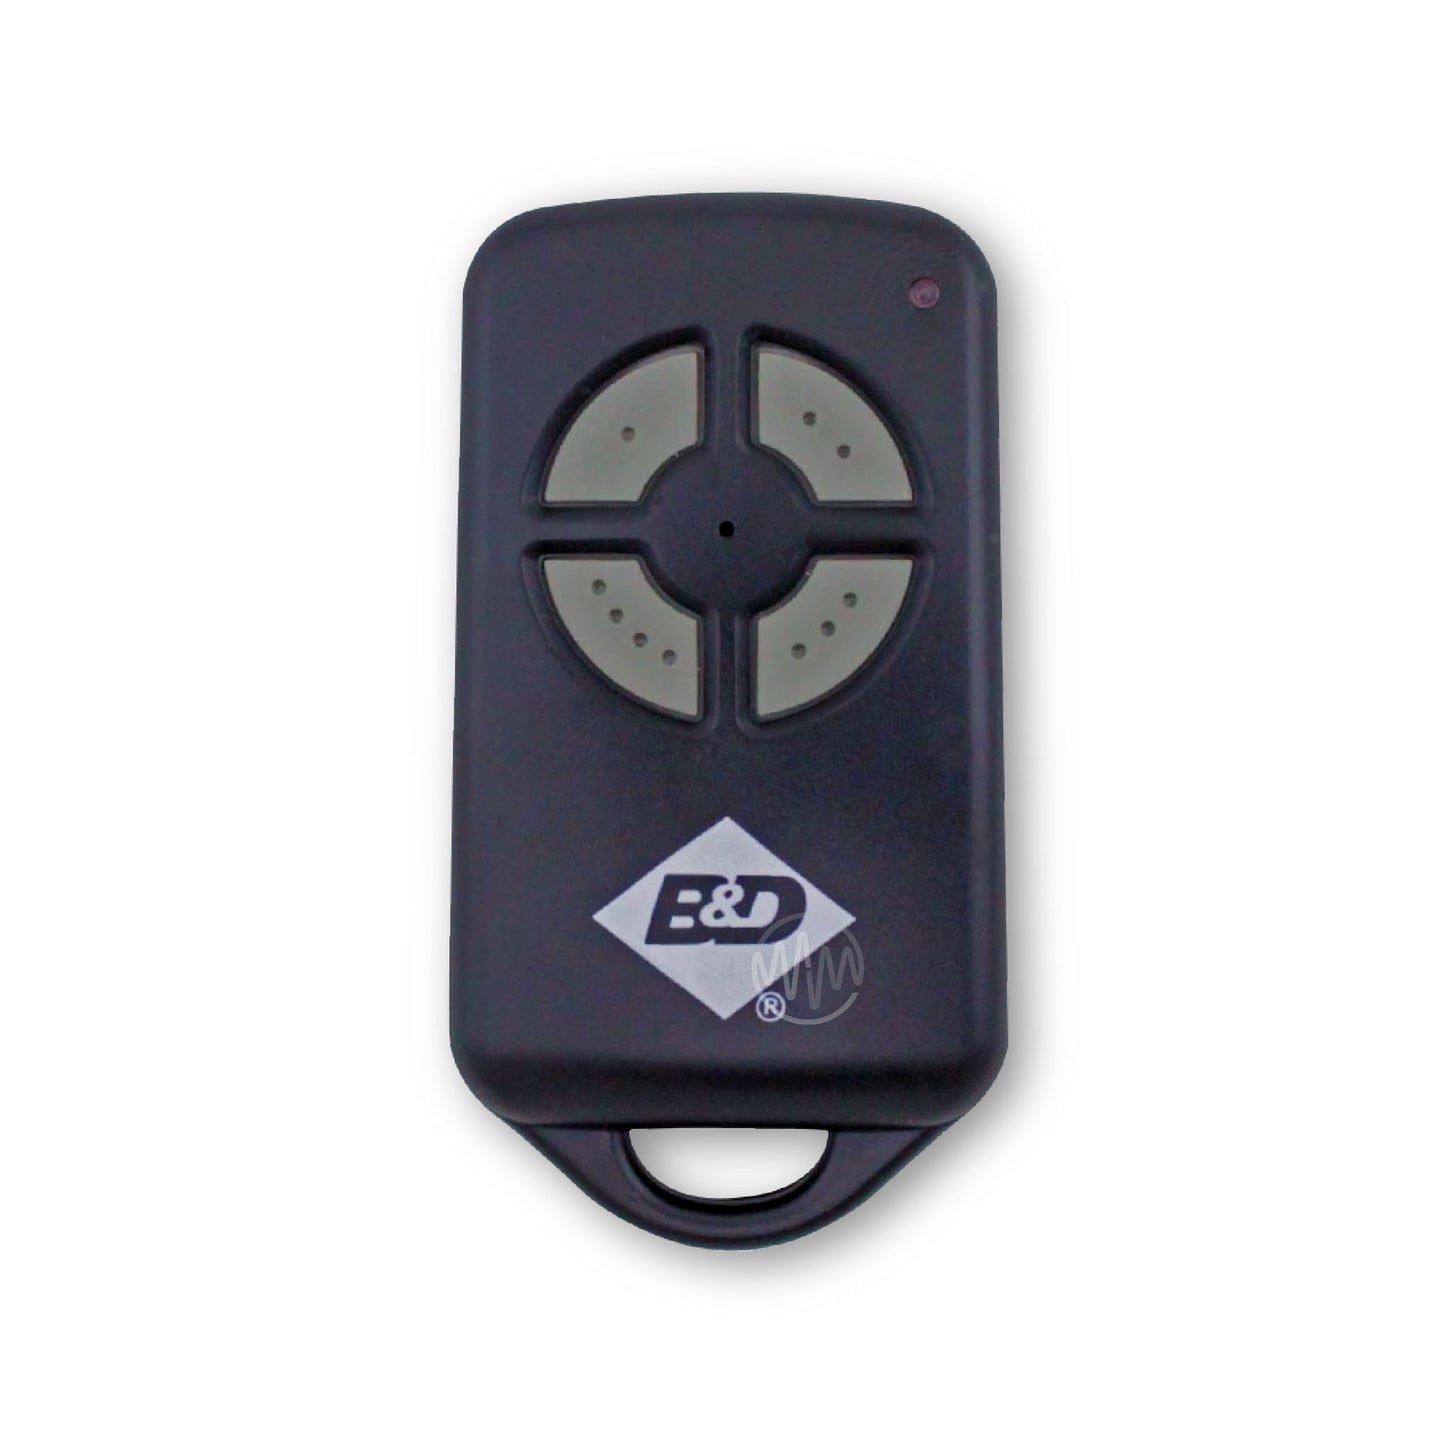 B&D CAD 601 Black Garage Door Remote